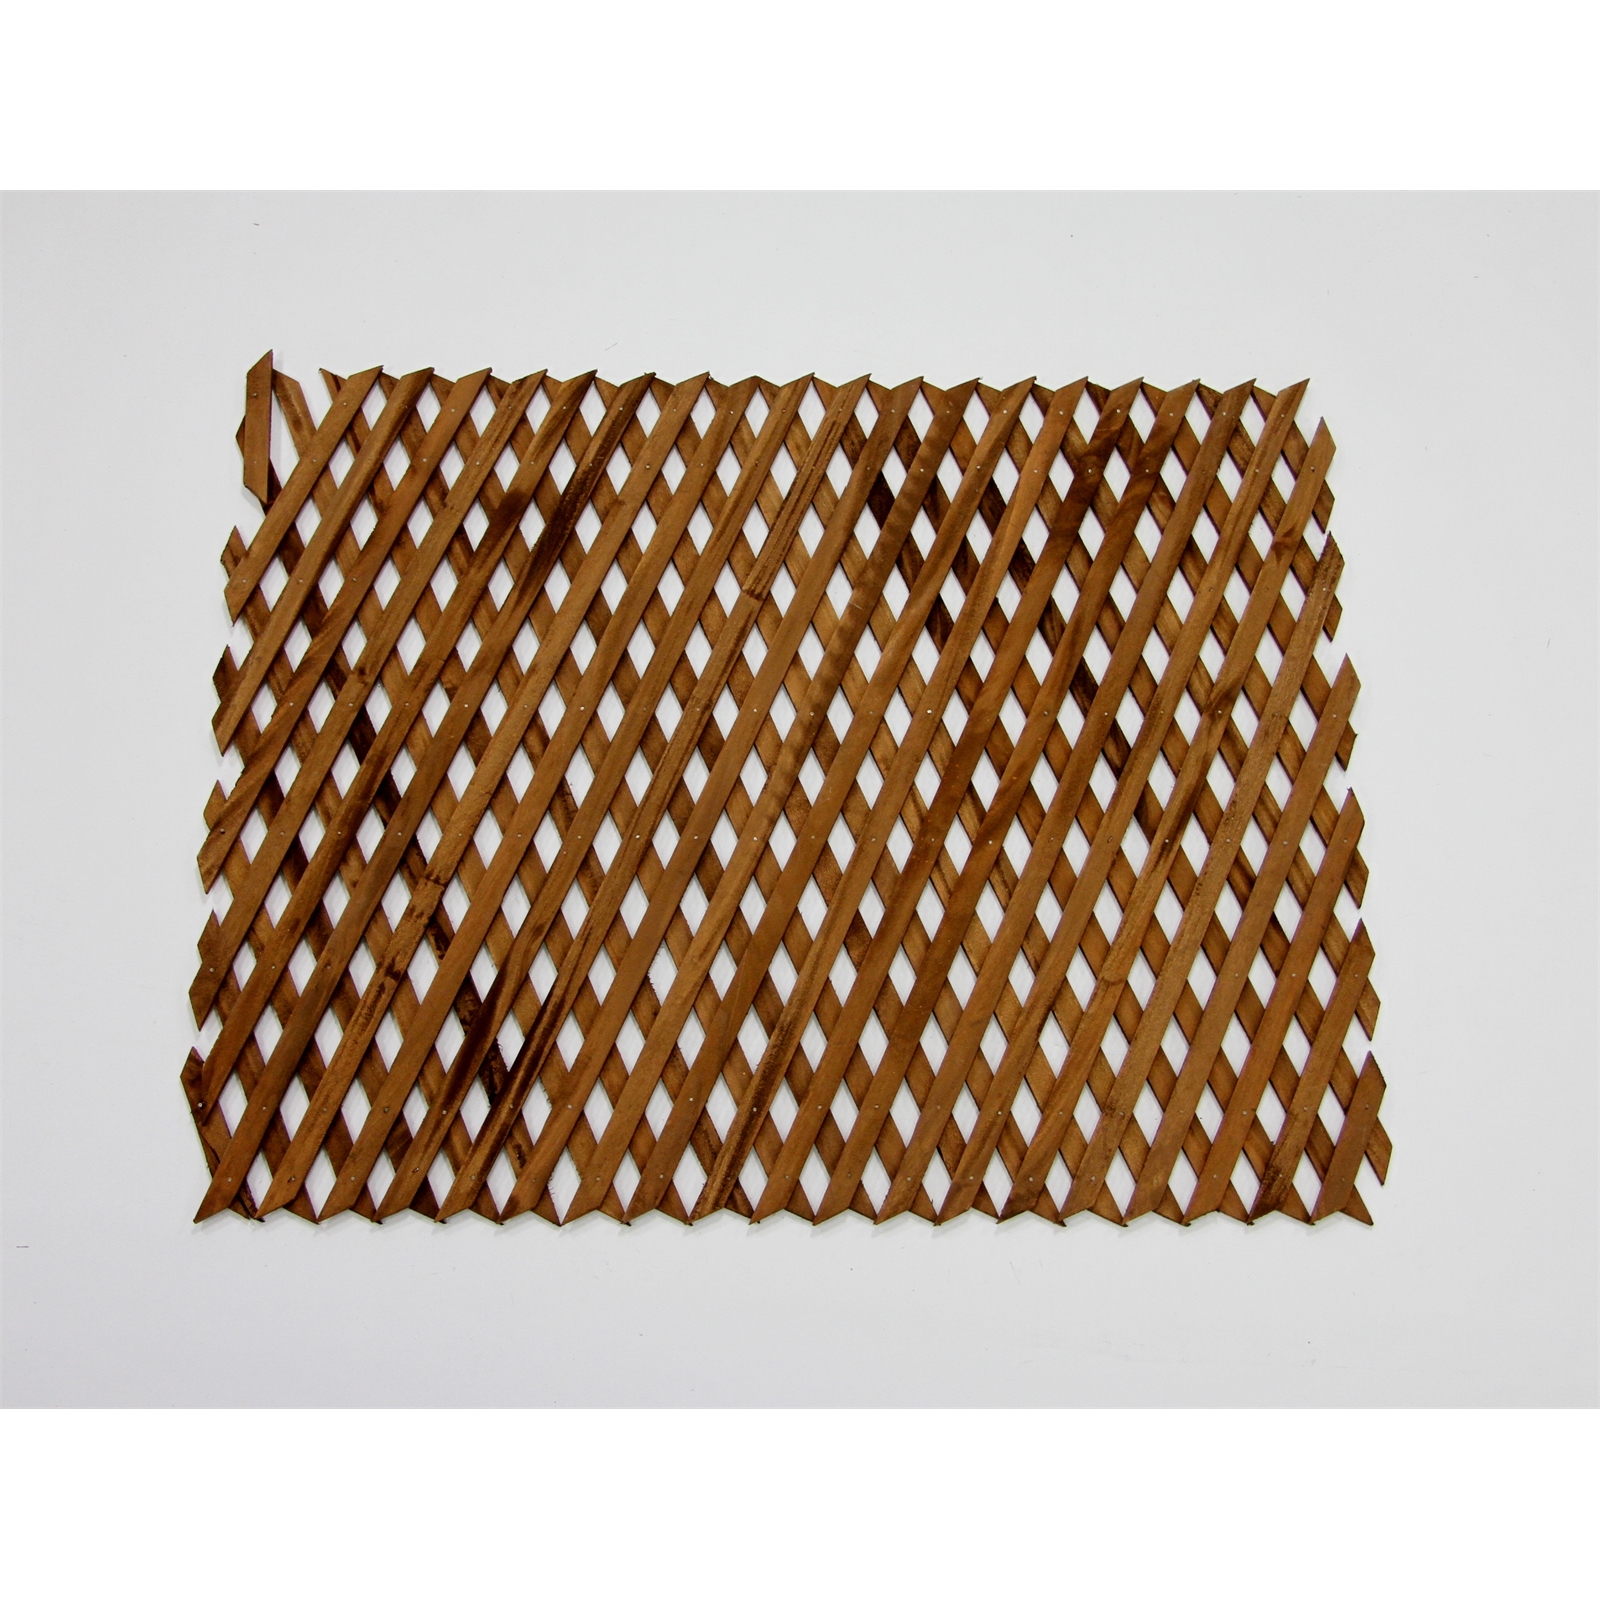 Lattice Makers 3000 x 900mm Brown Expandable Hardwood Trellis